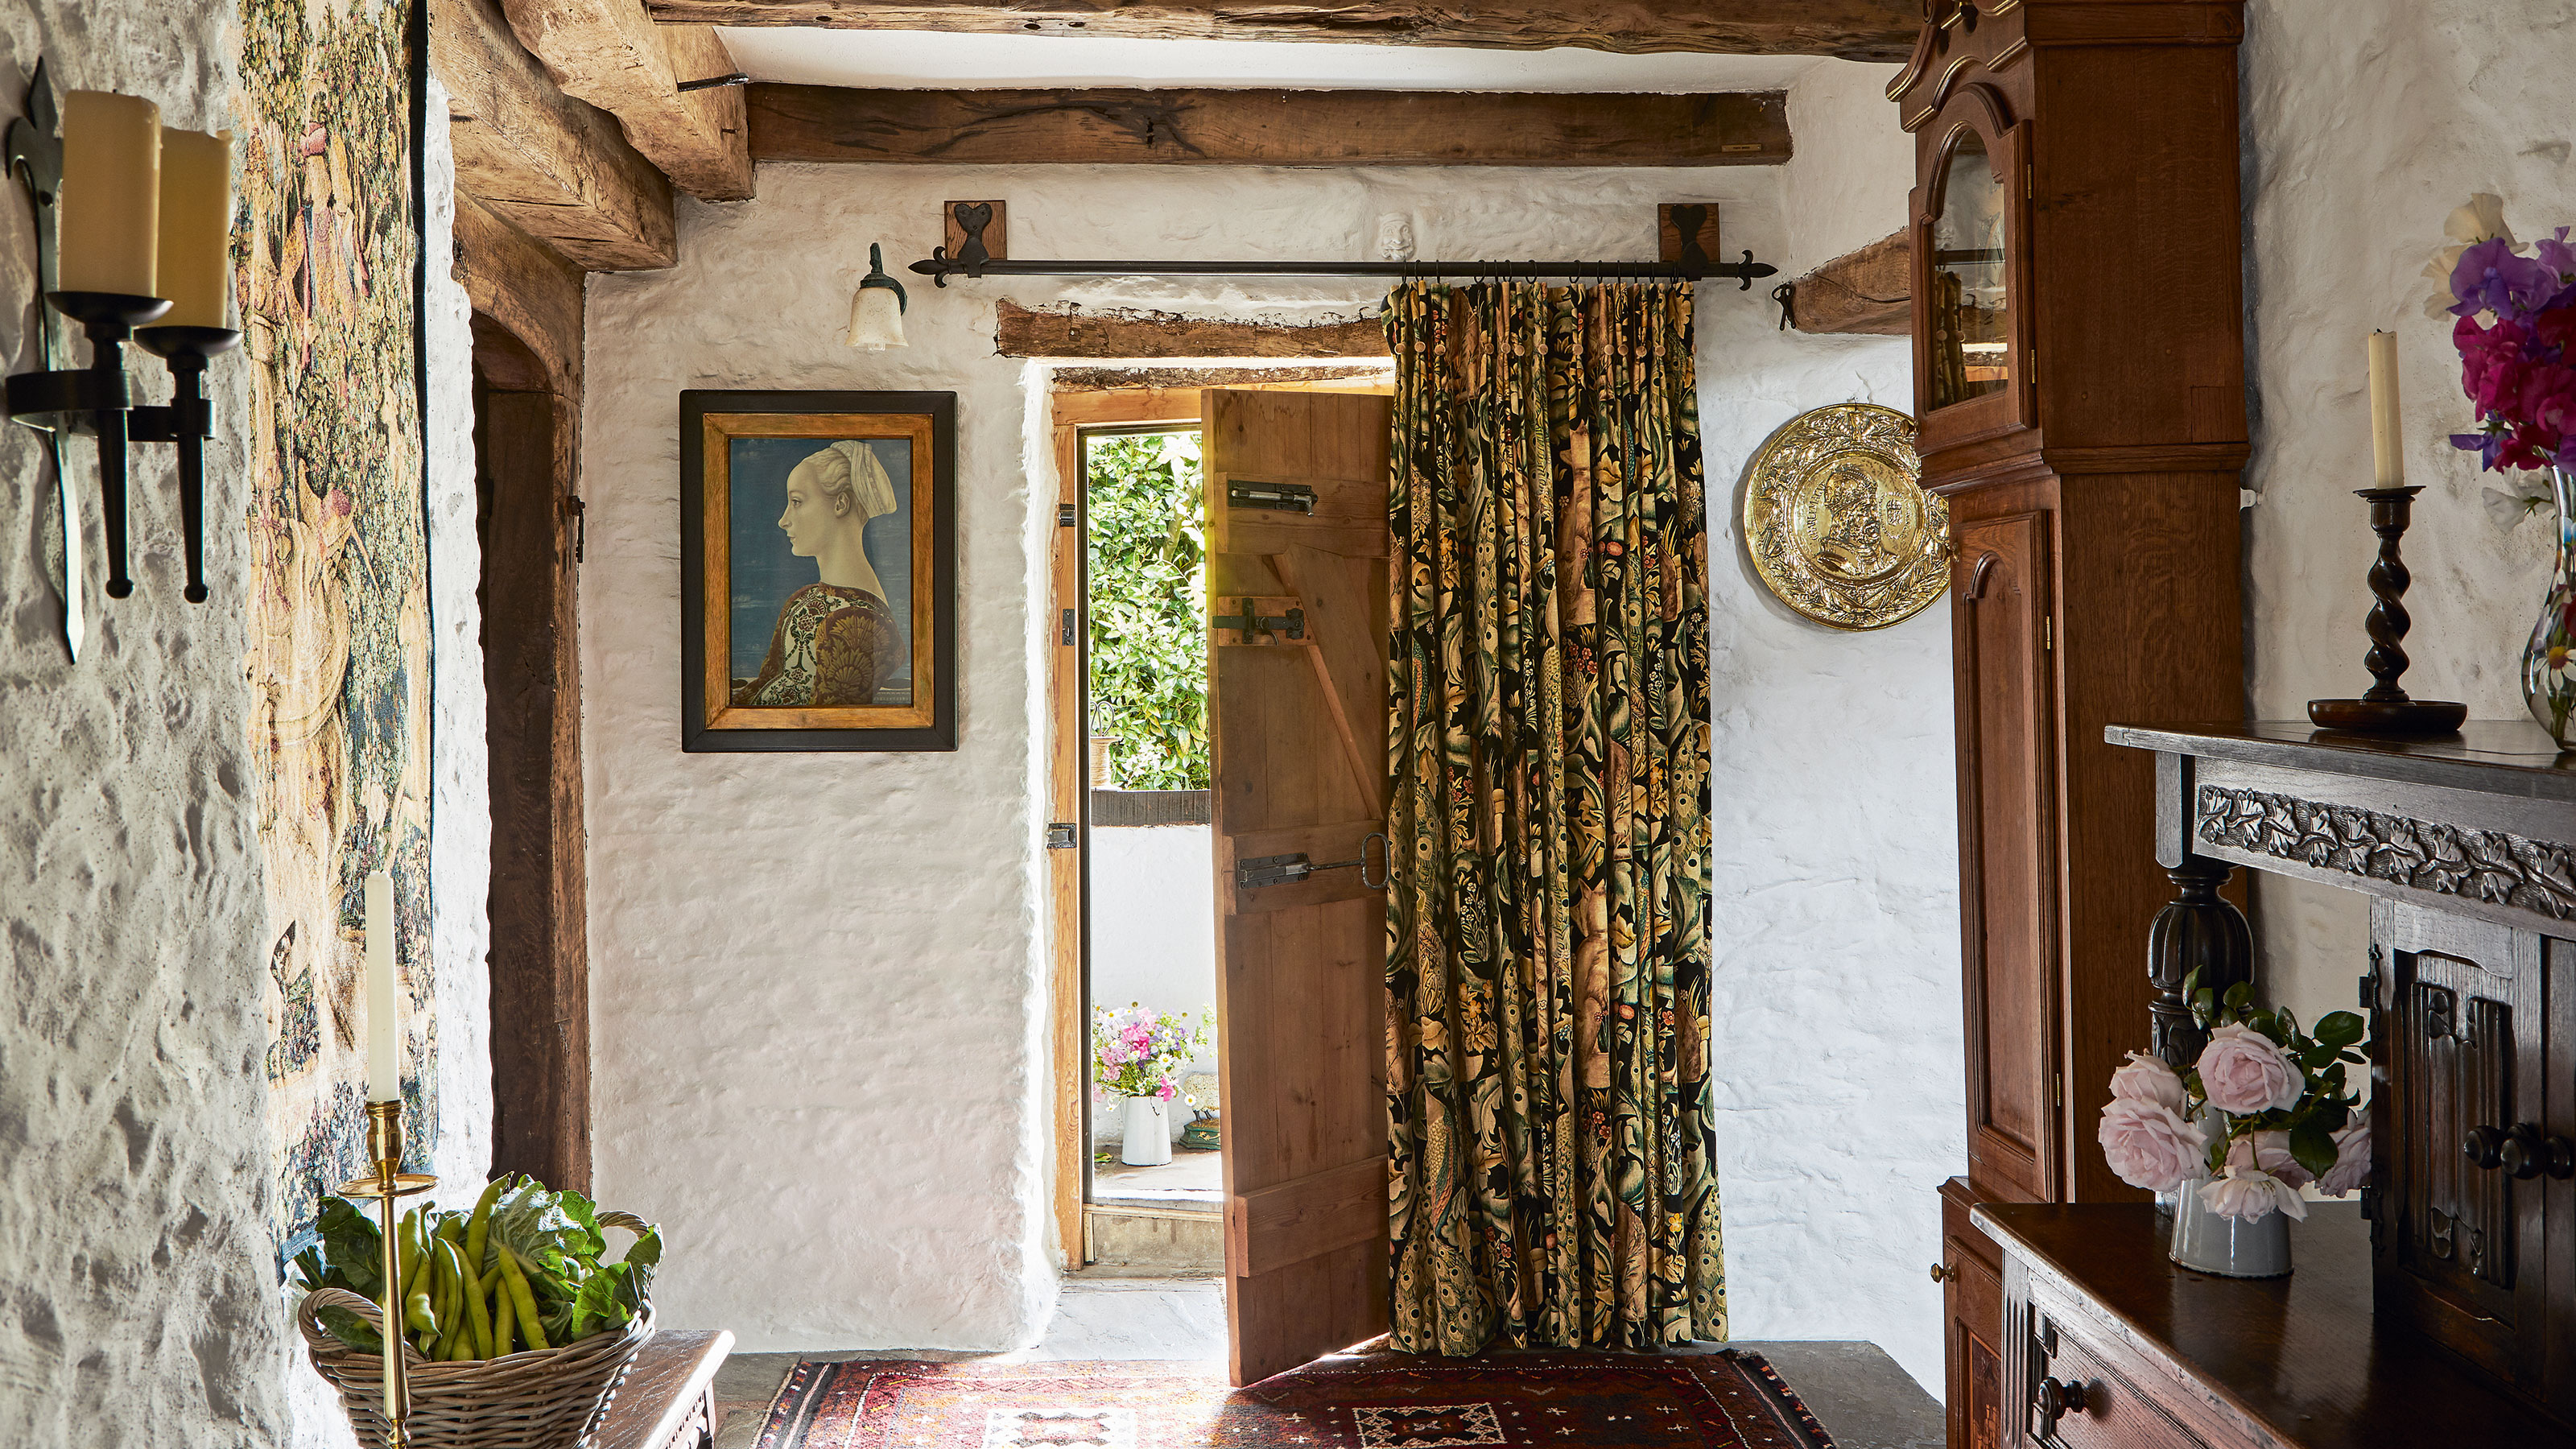 37 DIY Decor Ideas For The Country Home | Rustic farmhouse decor, Rustic  wall decor, Decor